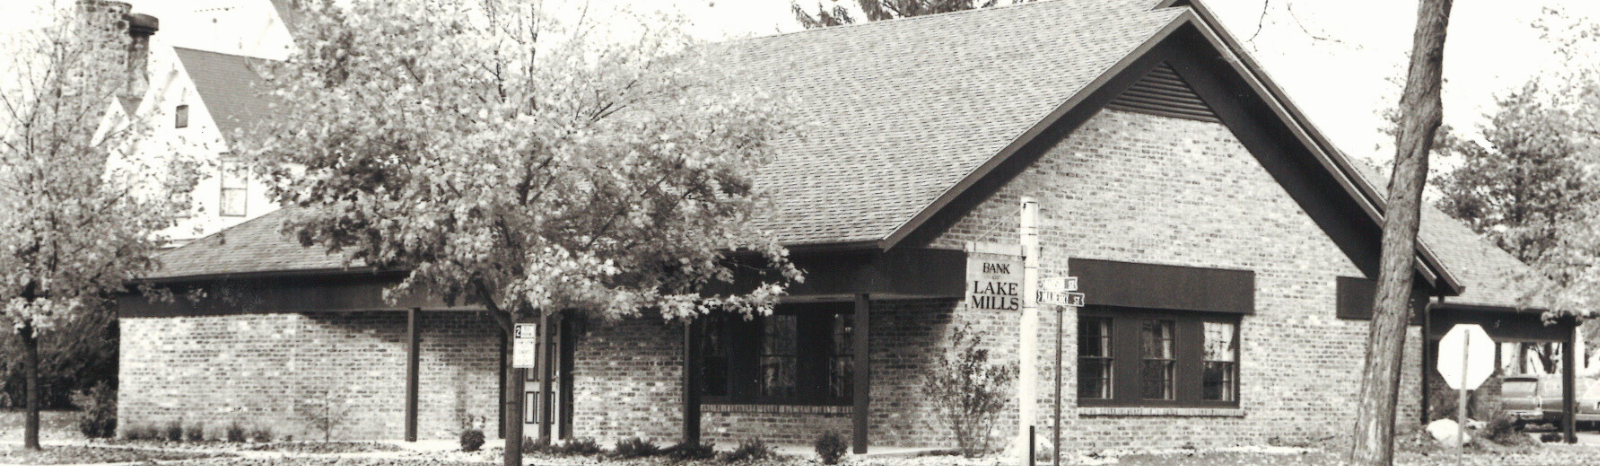 Old Lake Mills branch in black & white